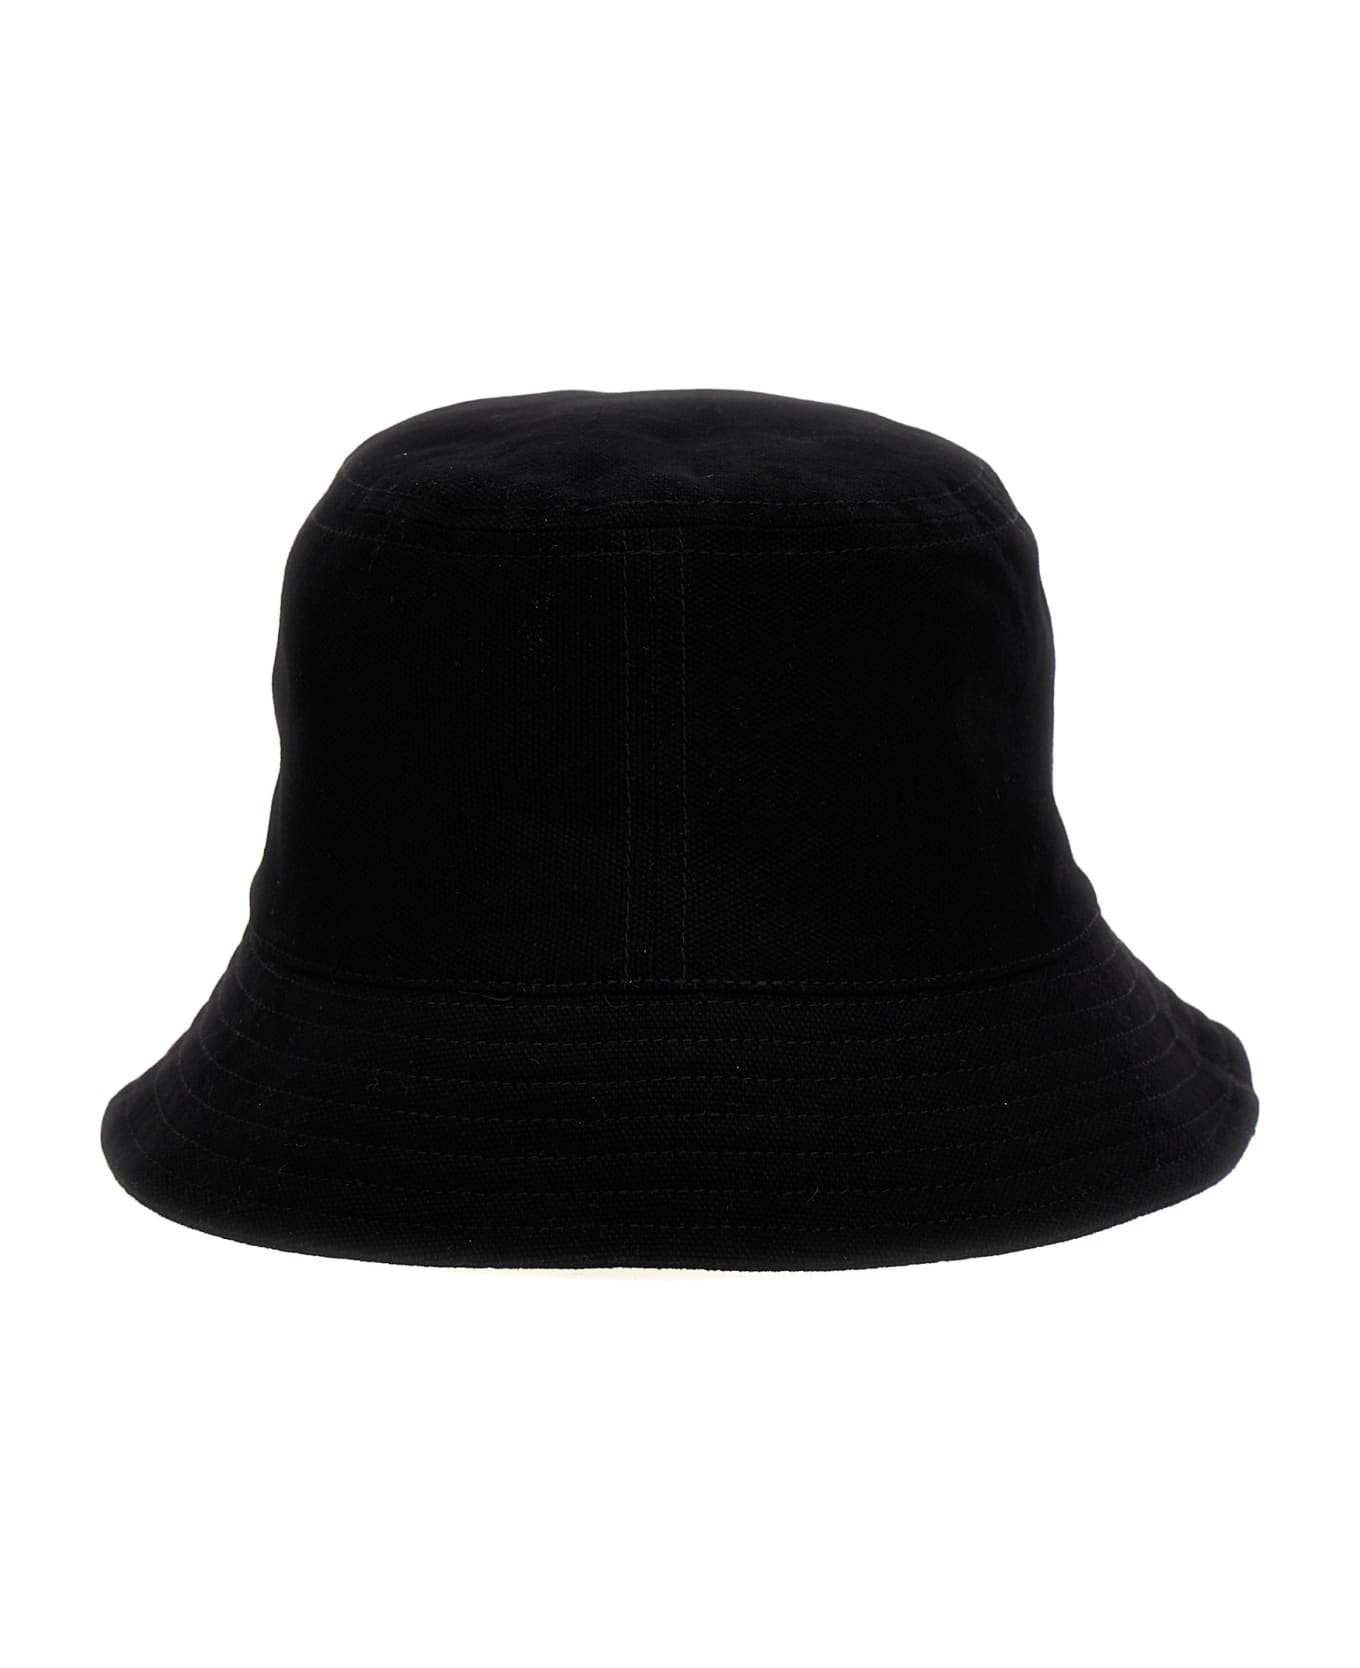 Isabel Marant 'haley' Bucket Hat - White/Black